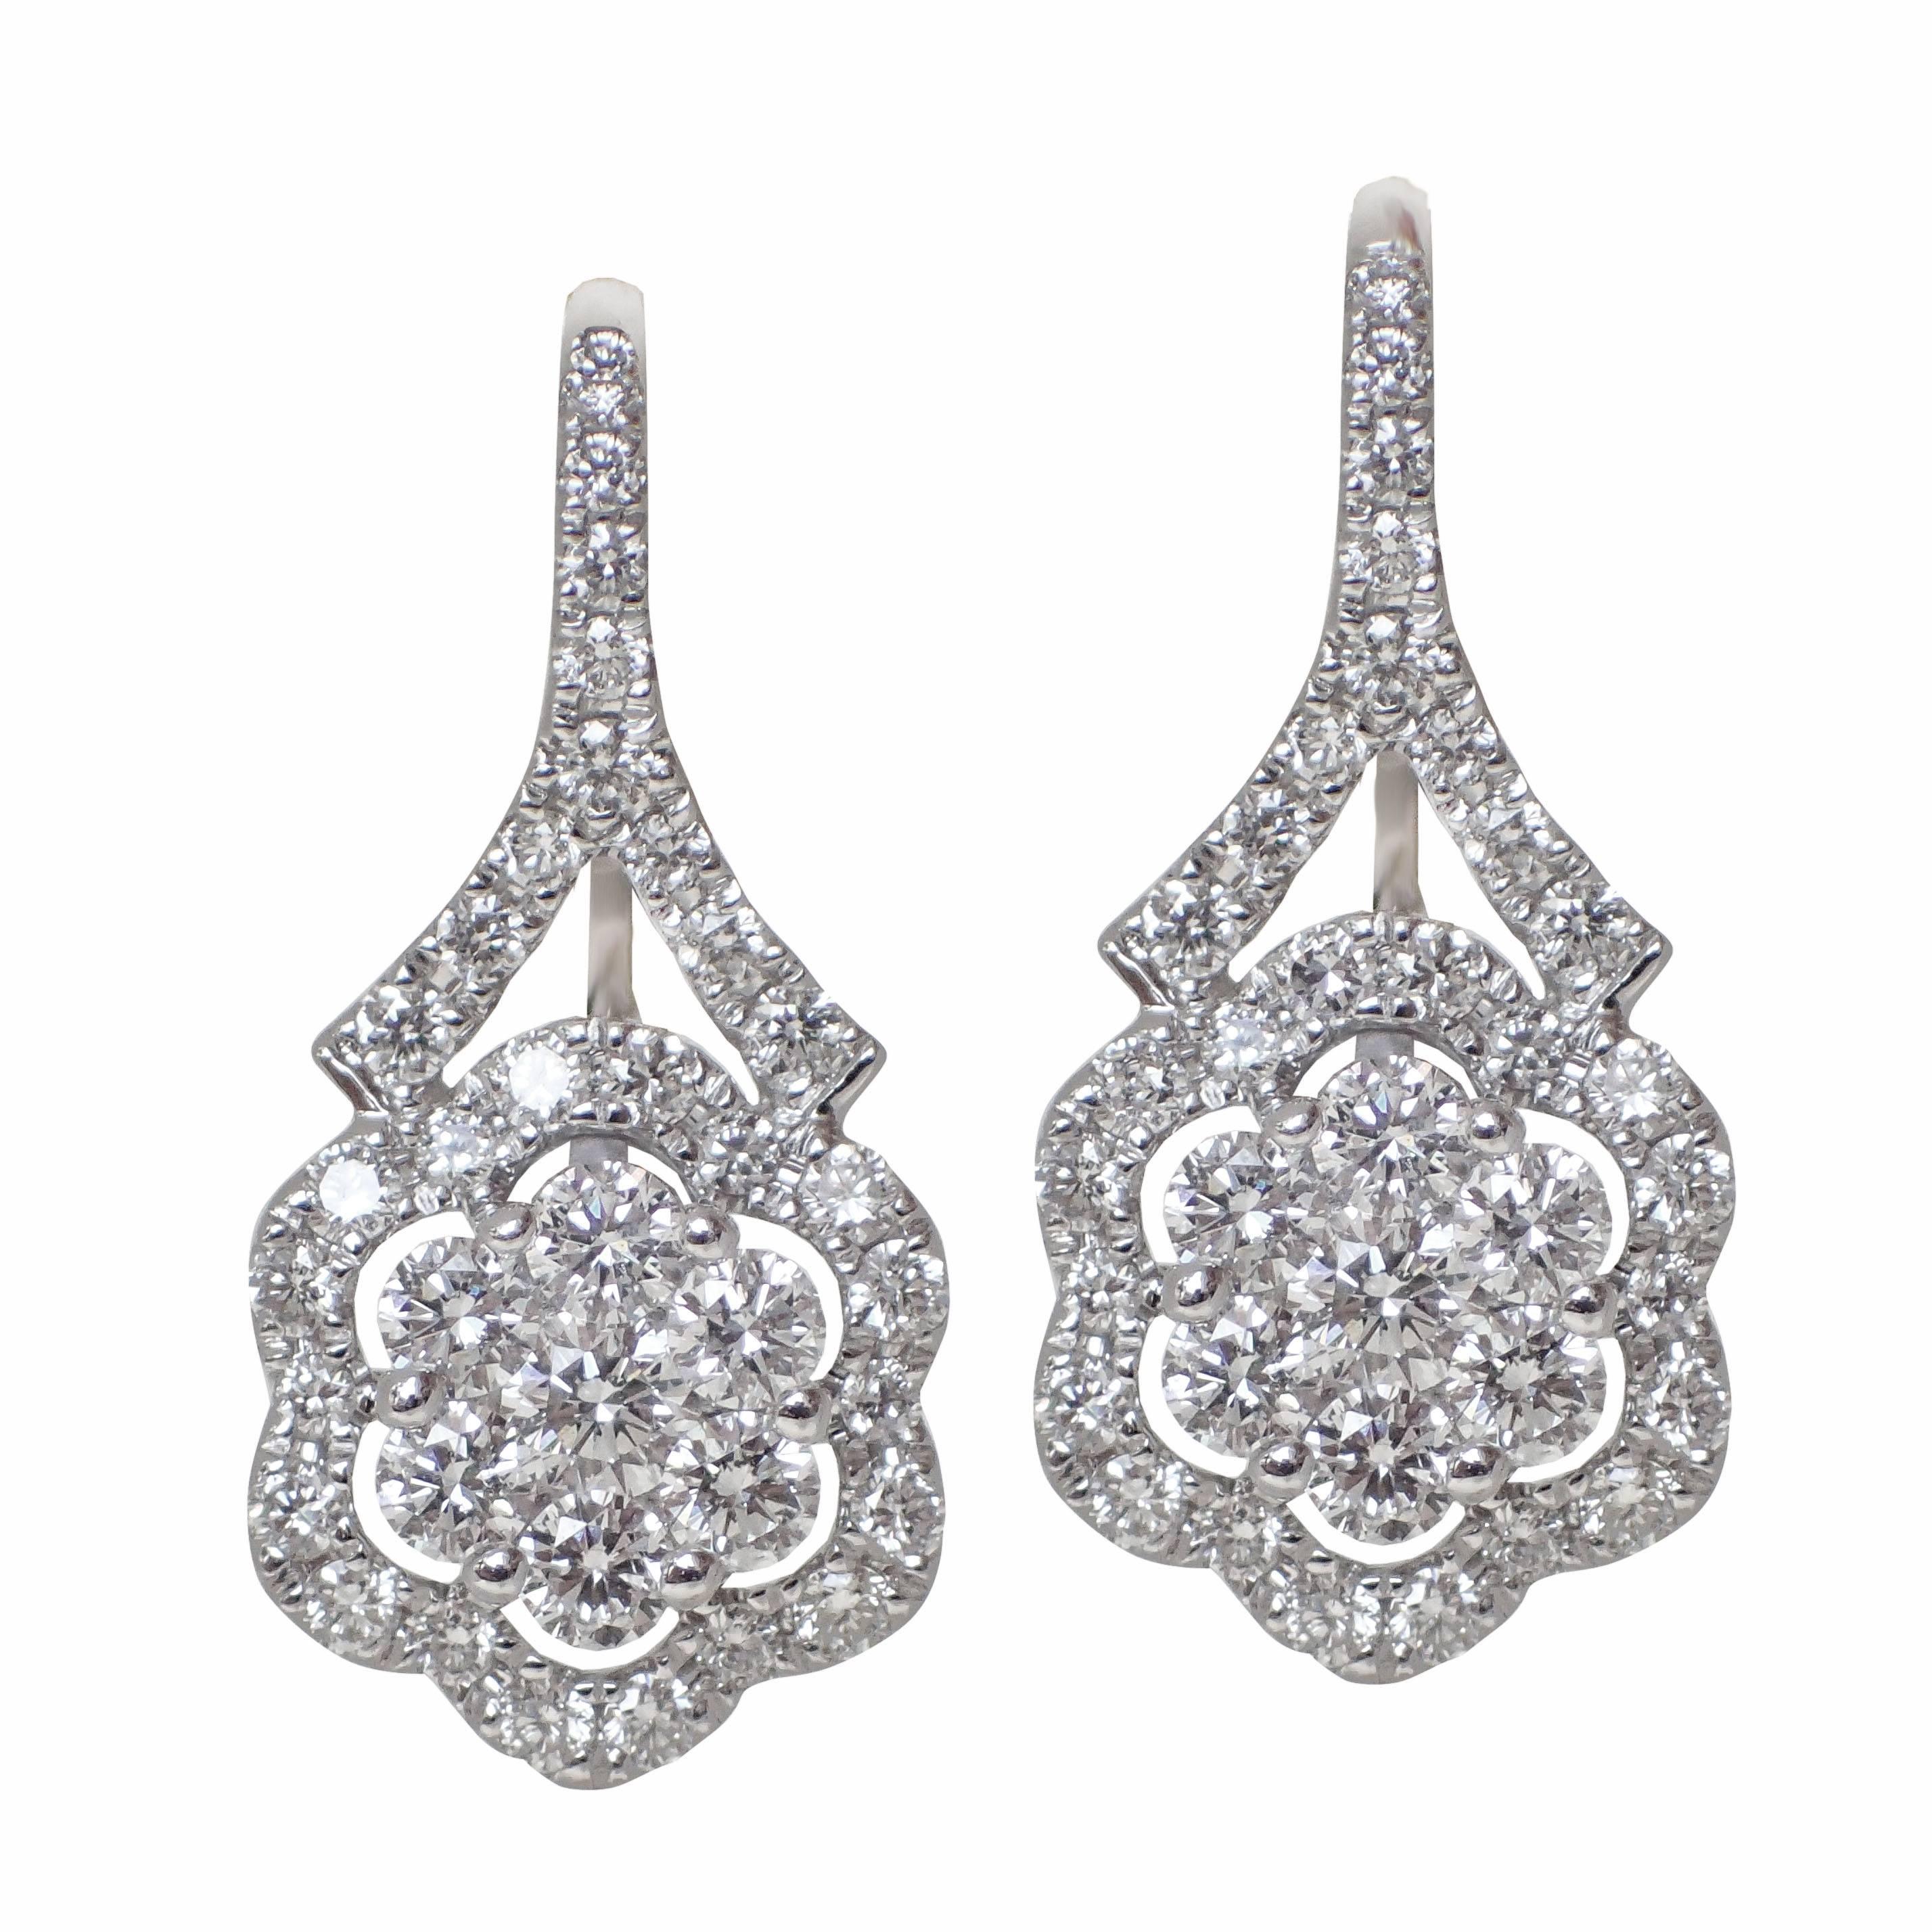 18 Karat White Gold Lever-Back Earrings with 1.01 Carat of Diamond